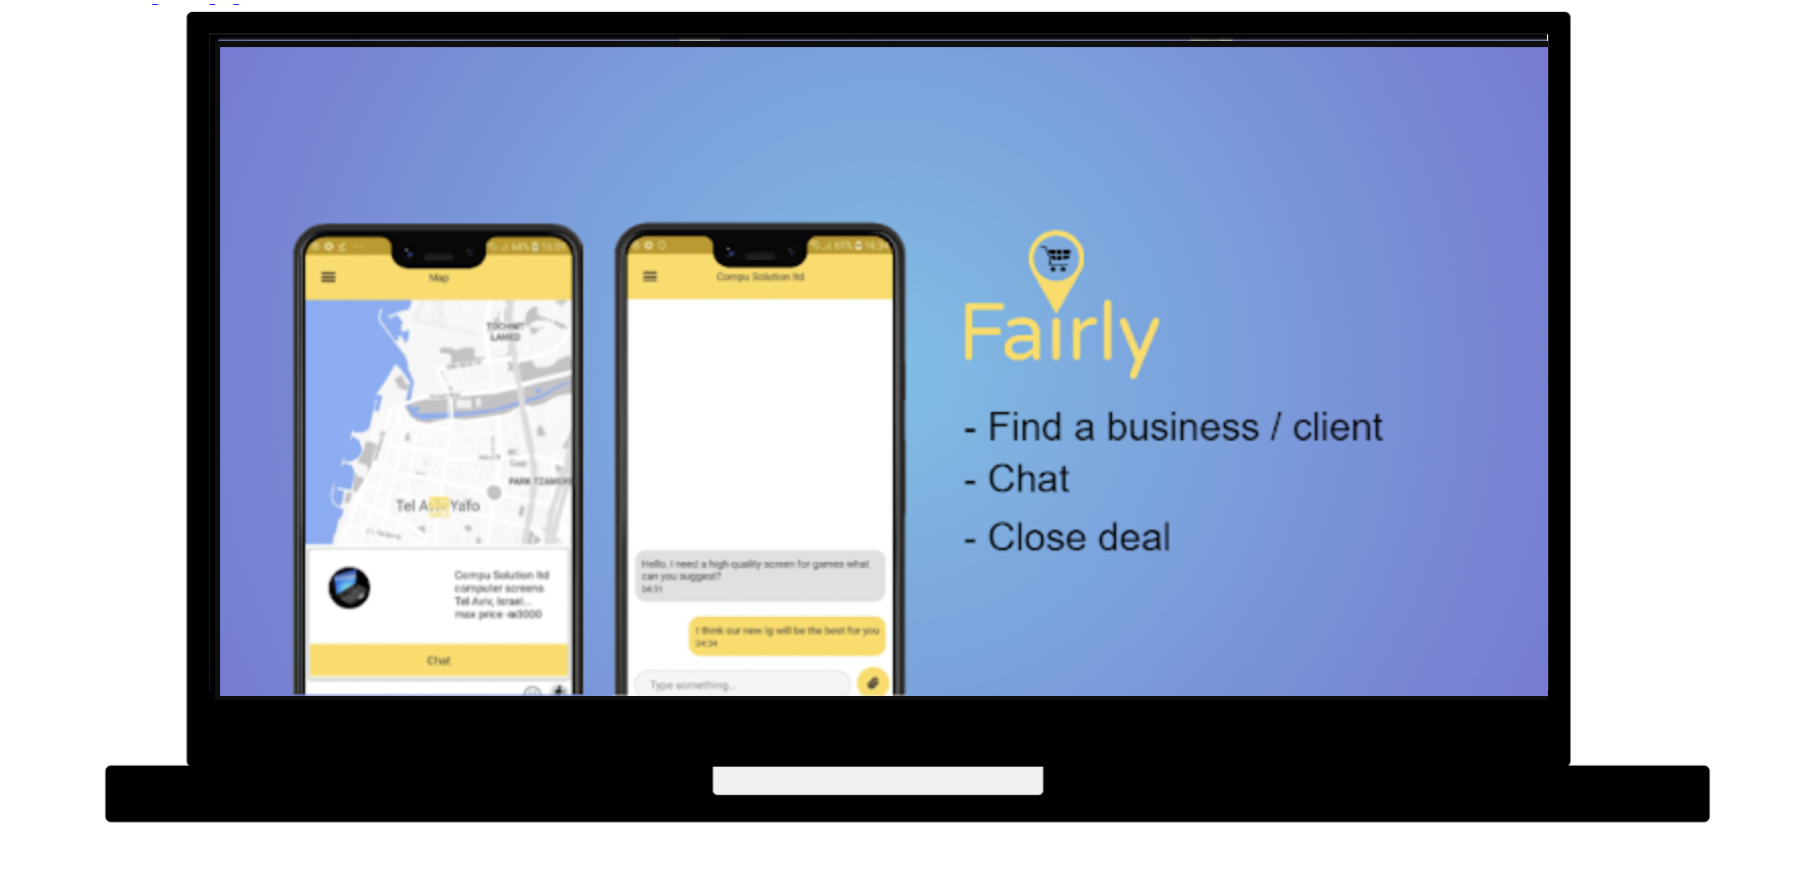 Fairly App: Businesses around me